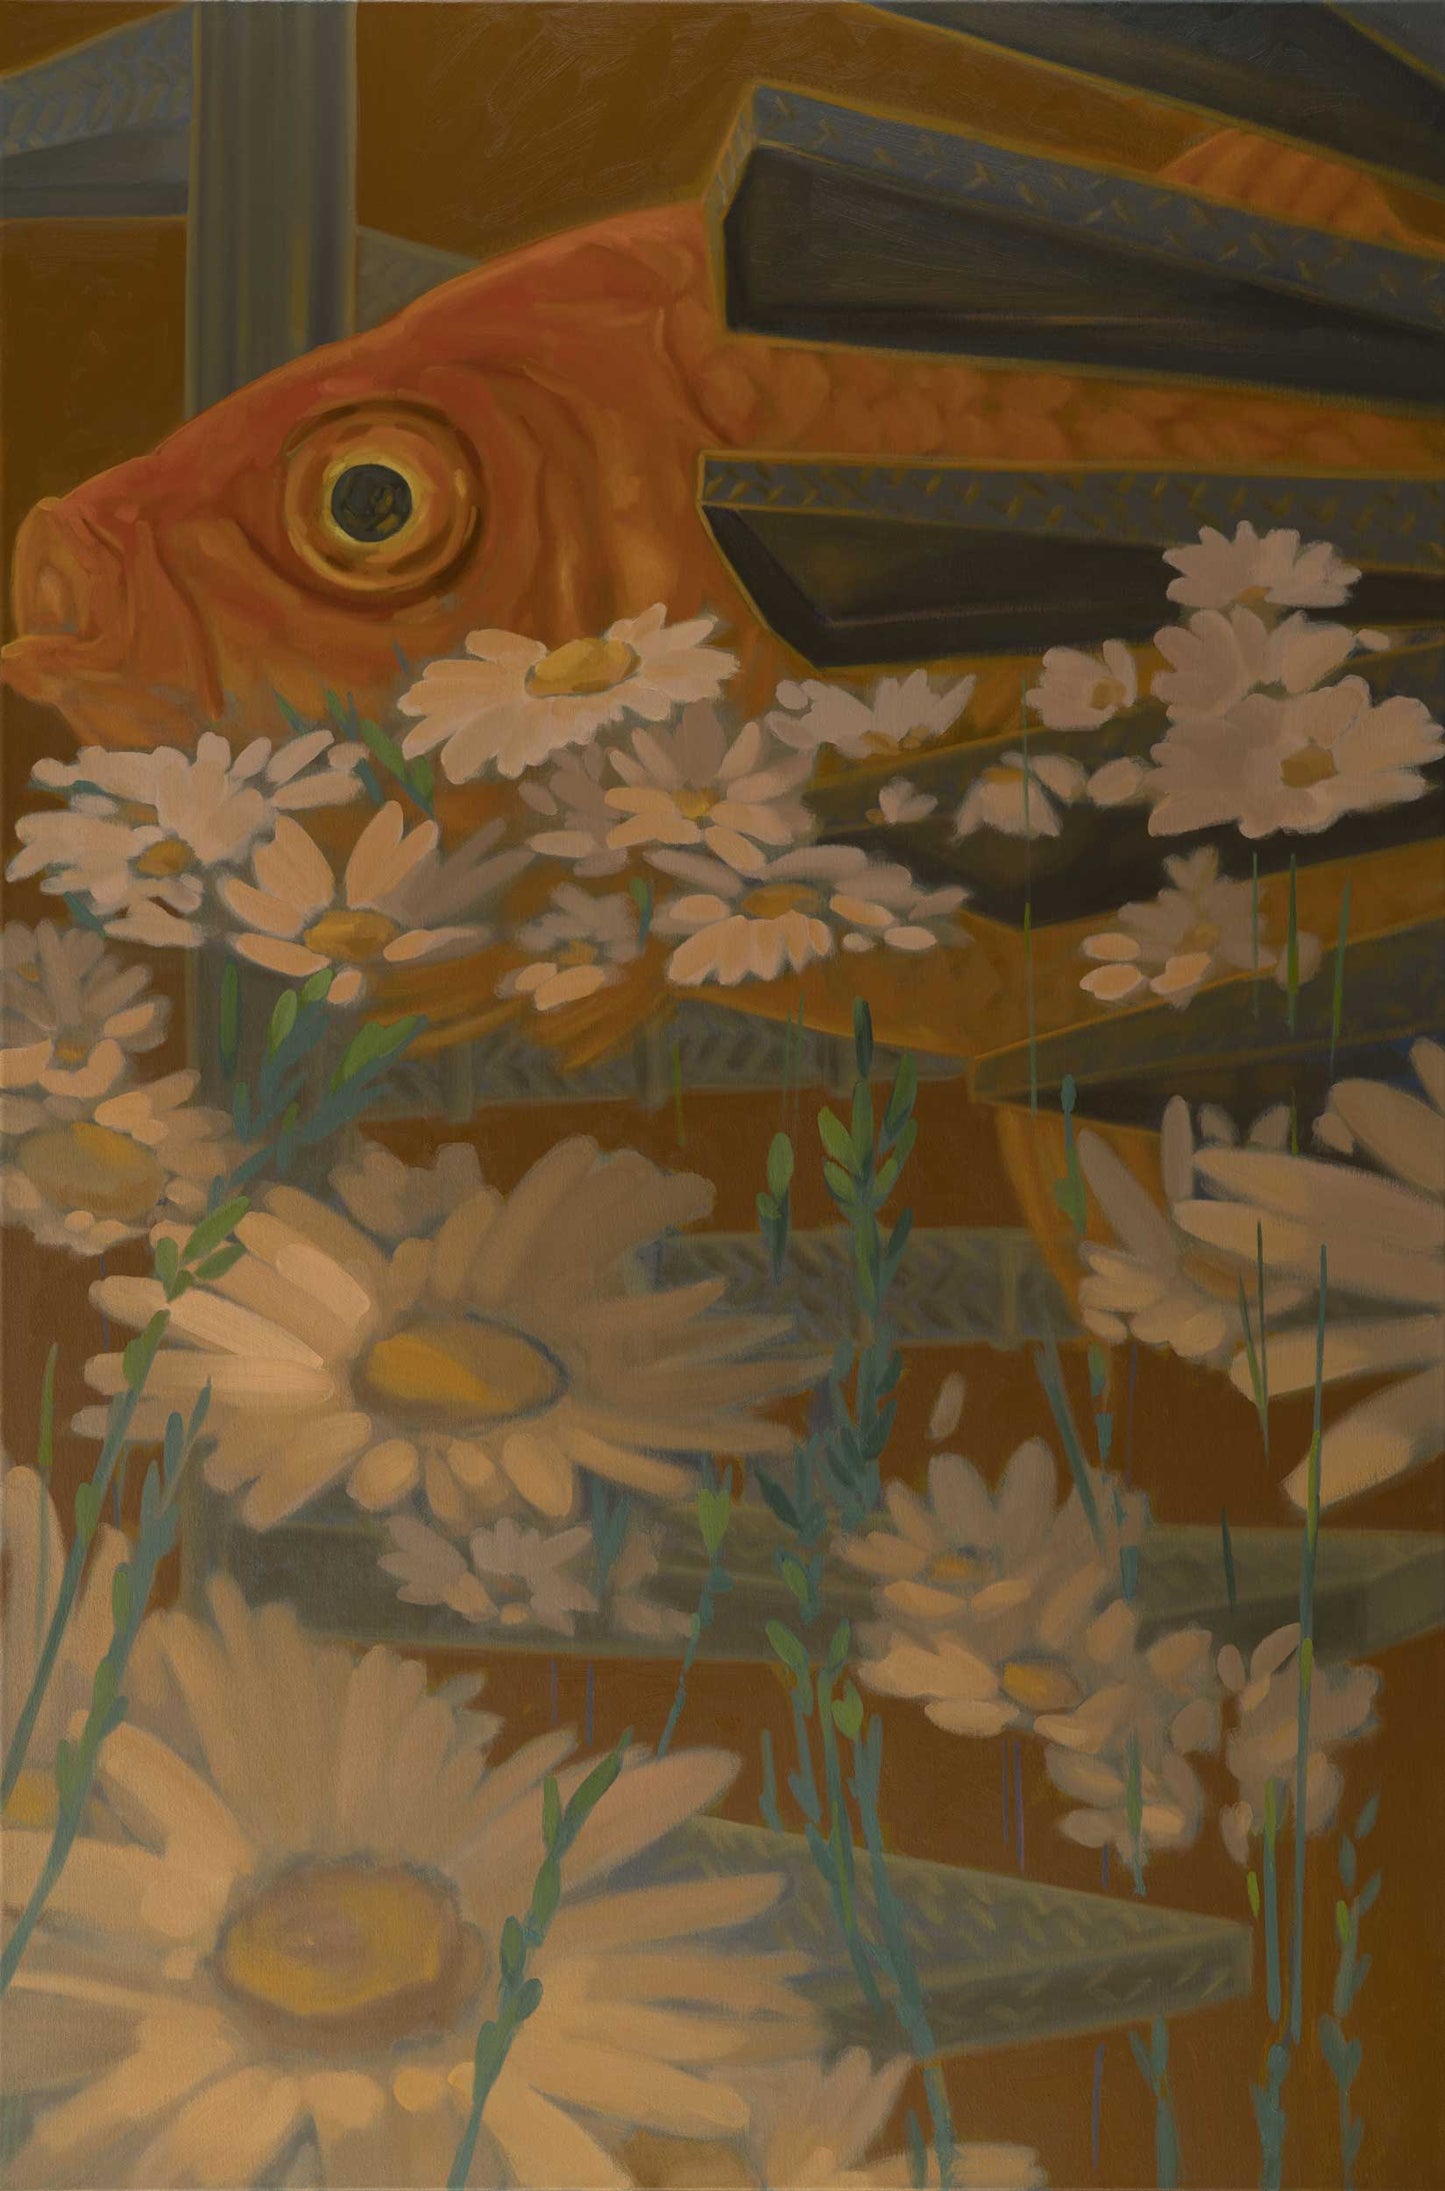 Goldfish and daisies, canvas print, 30x20 cm, 60x40 cm, 75x50 cm, 90x60 cm, 120x80 cm